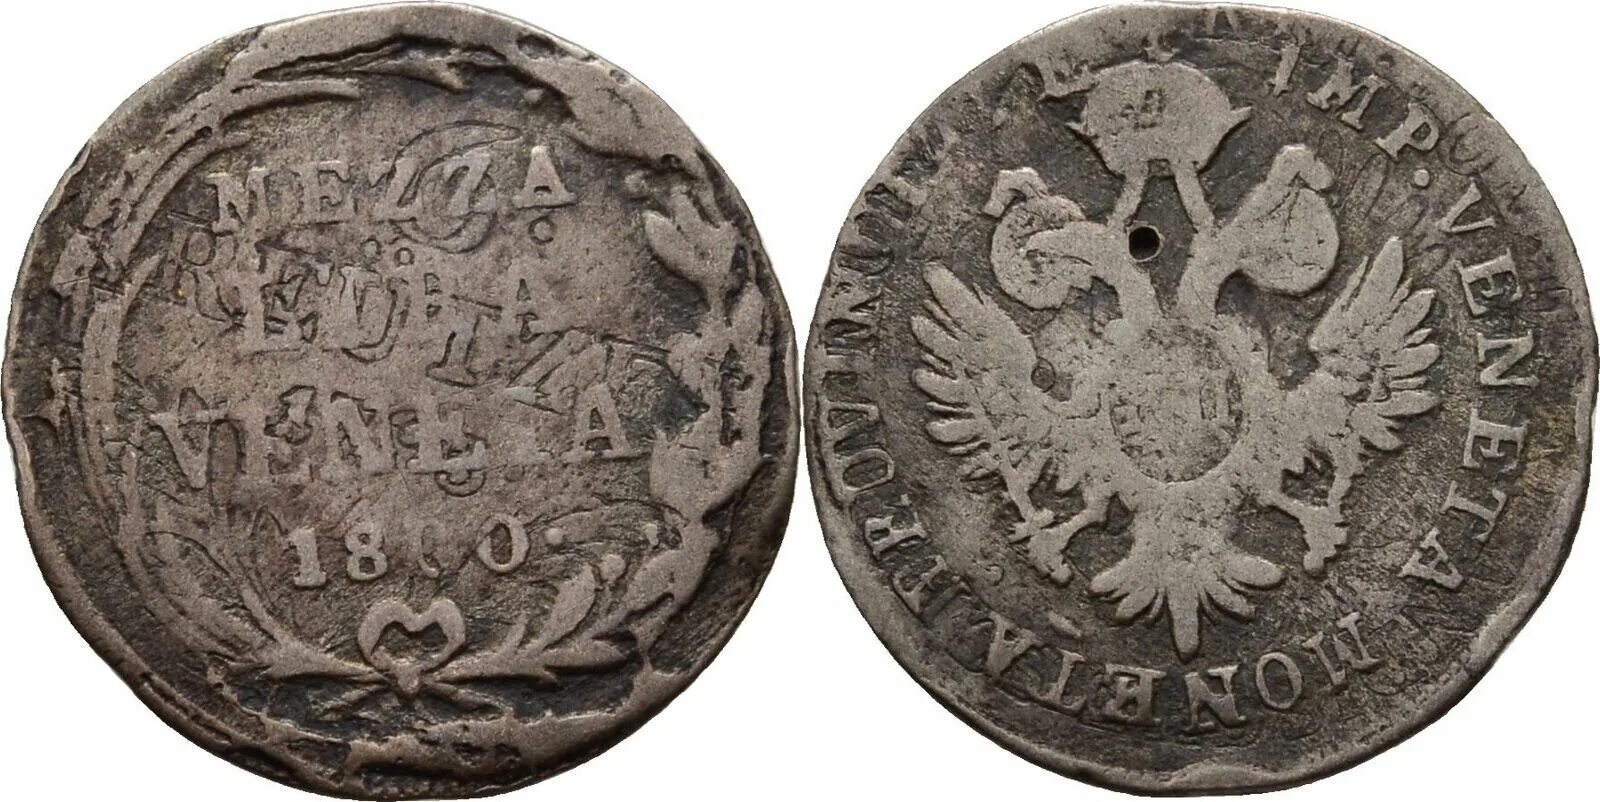 Монета Franz 1800. Монеты Европы 1800 годов. Modena, 1629-1658 Francis i) 2 Ducatoni 1631. 1800 лир